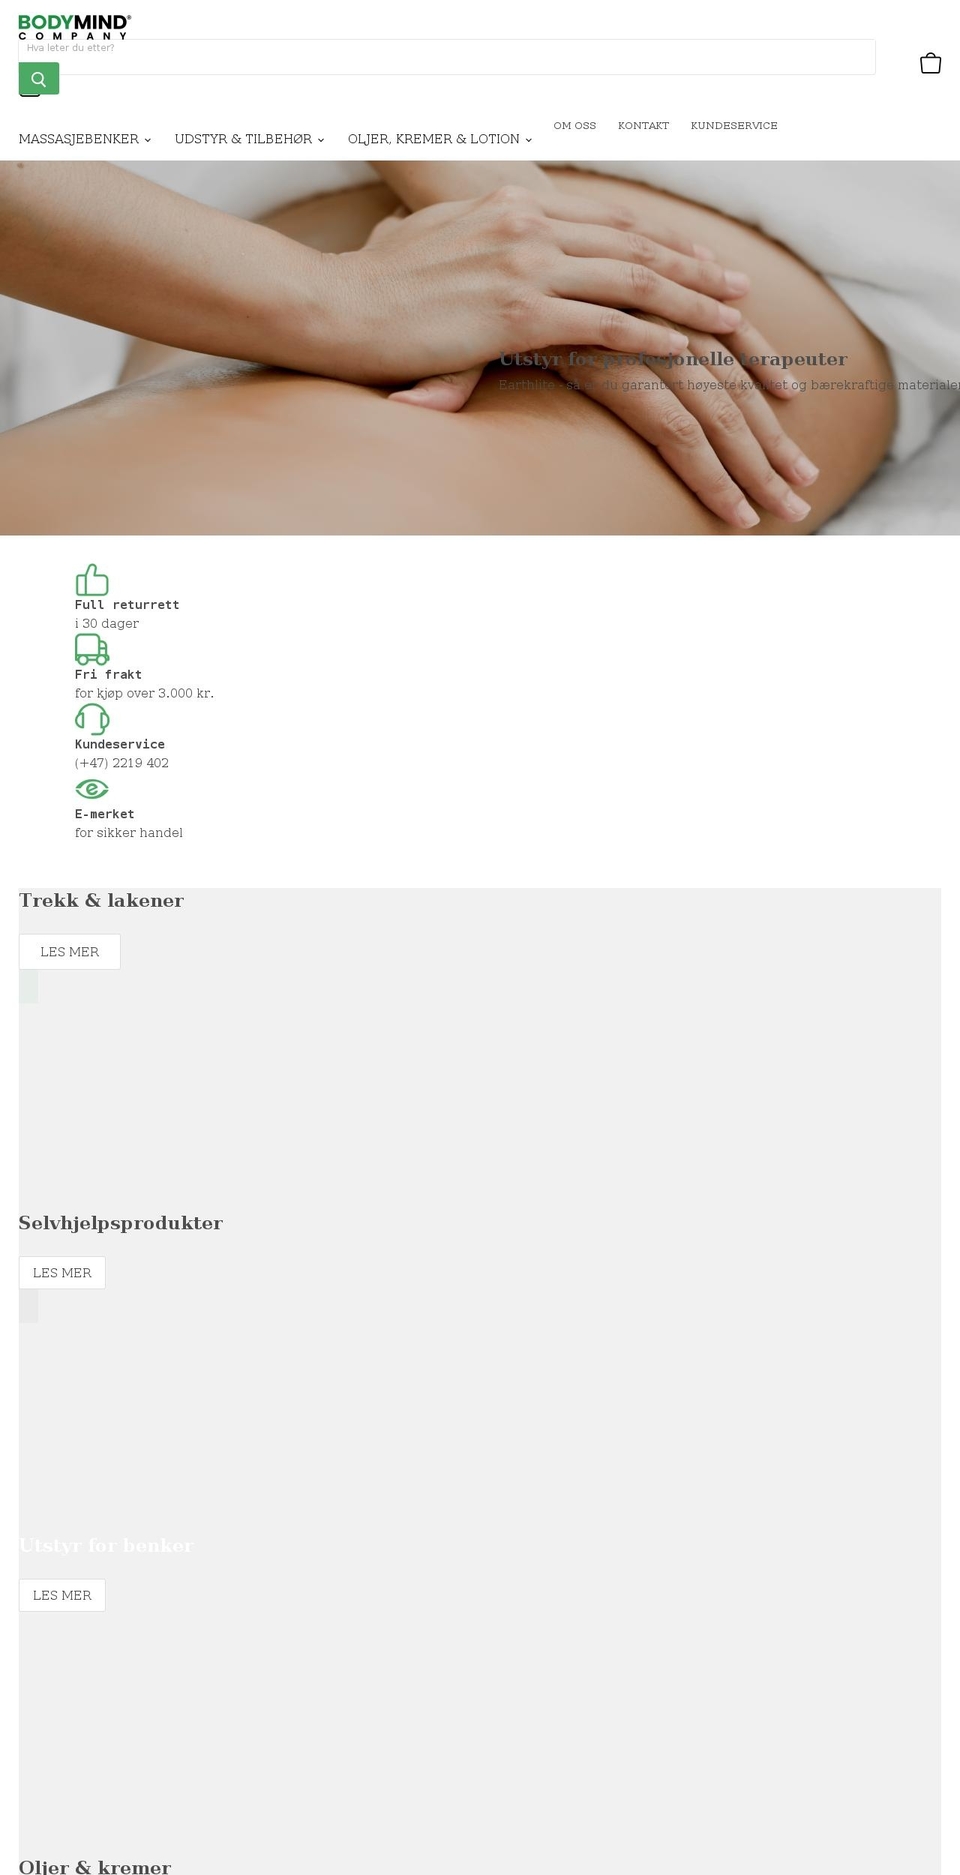 bodymindcompany.no shopify website screenshot